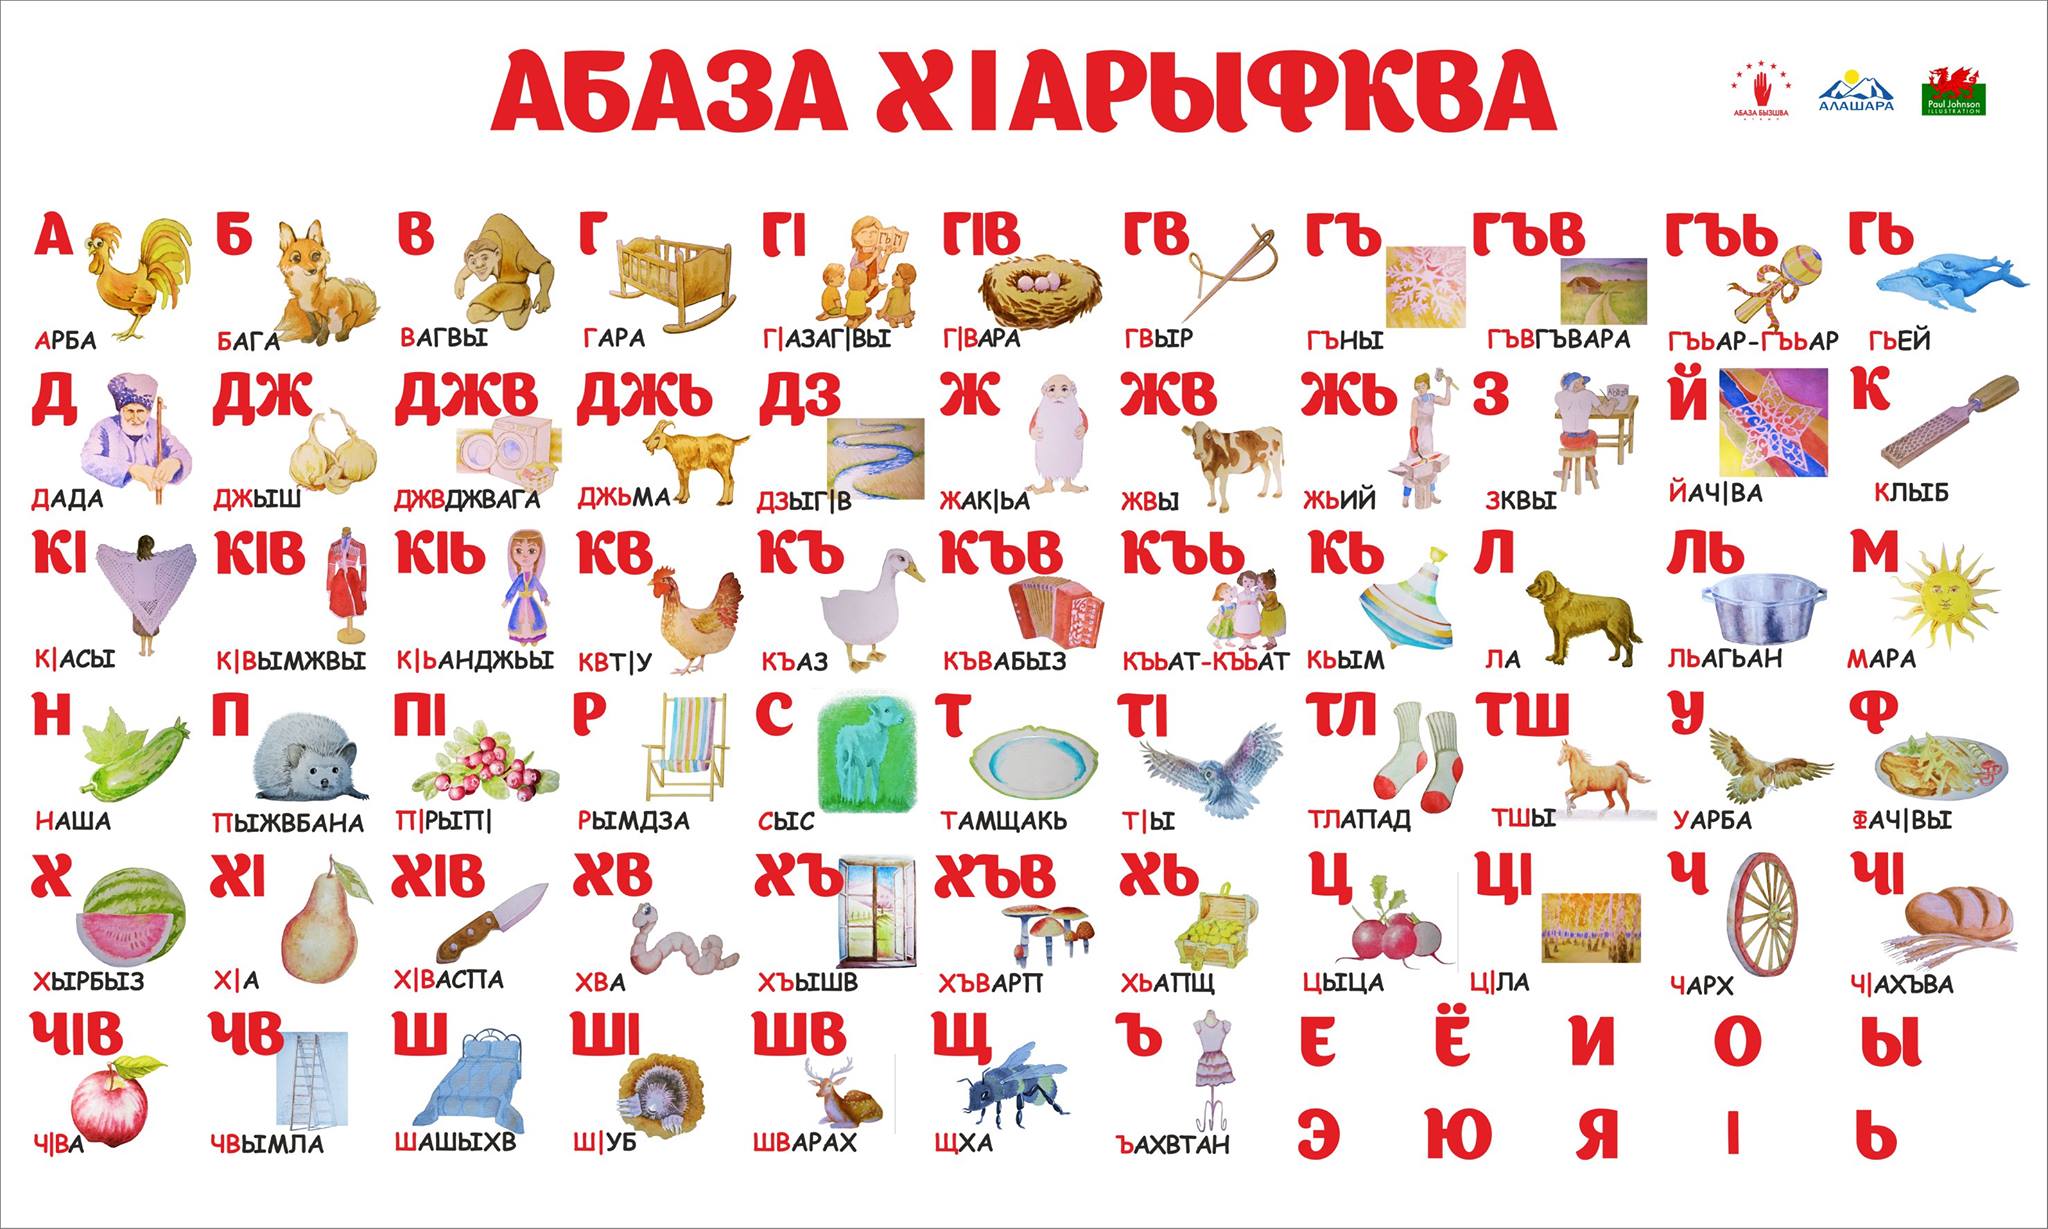 Кабардинский язык самый. Алфавит. Абазинский алфавит. Абазинский алфавит с произношением. Азбука адыгейского языка.